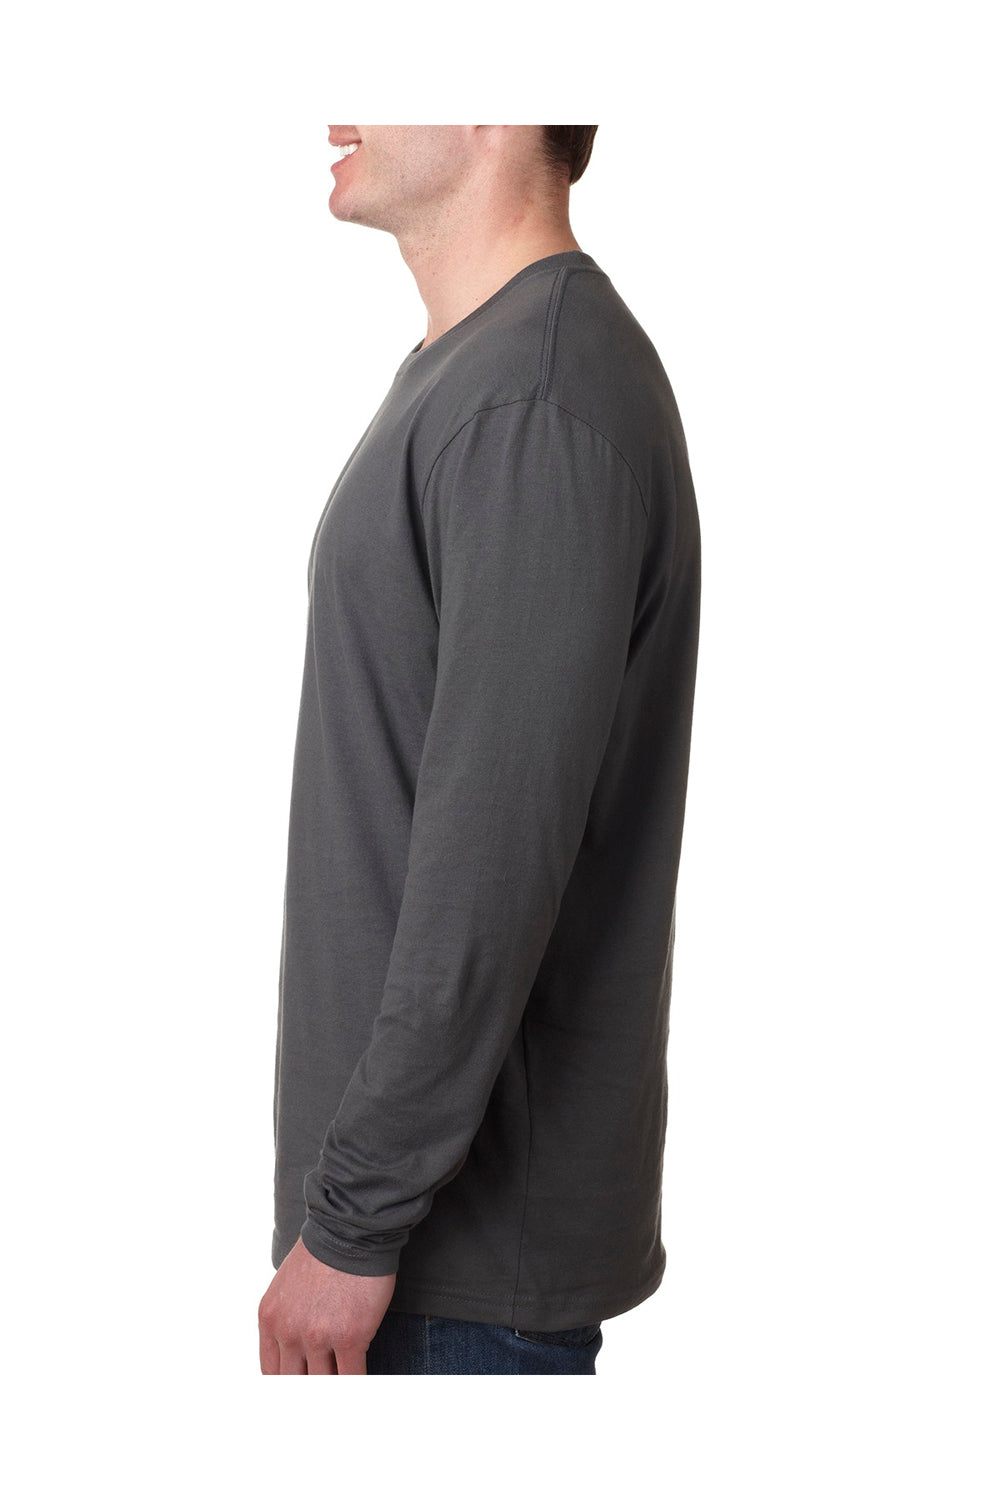 Next Level N3601 Mens Fine Jersey Long Sleeve Crewneck T-Shirt Heavy Metal Grey Side